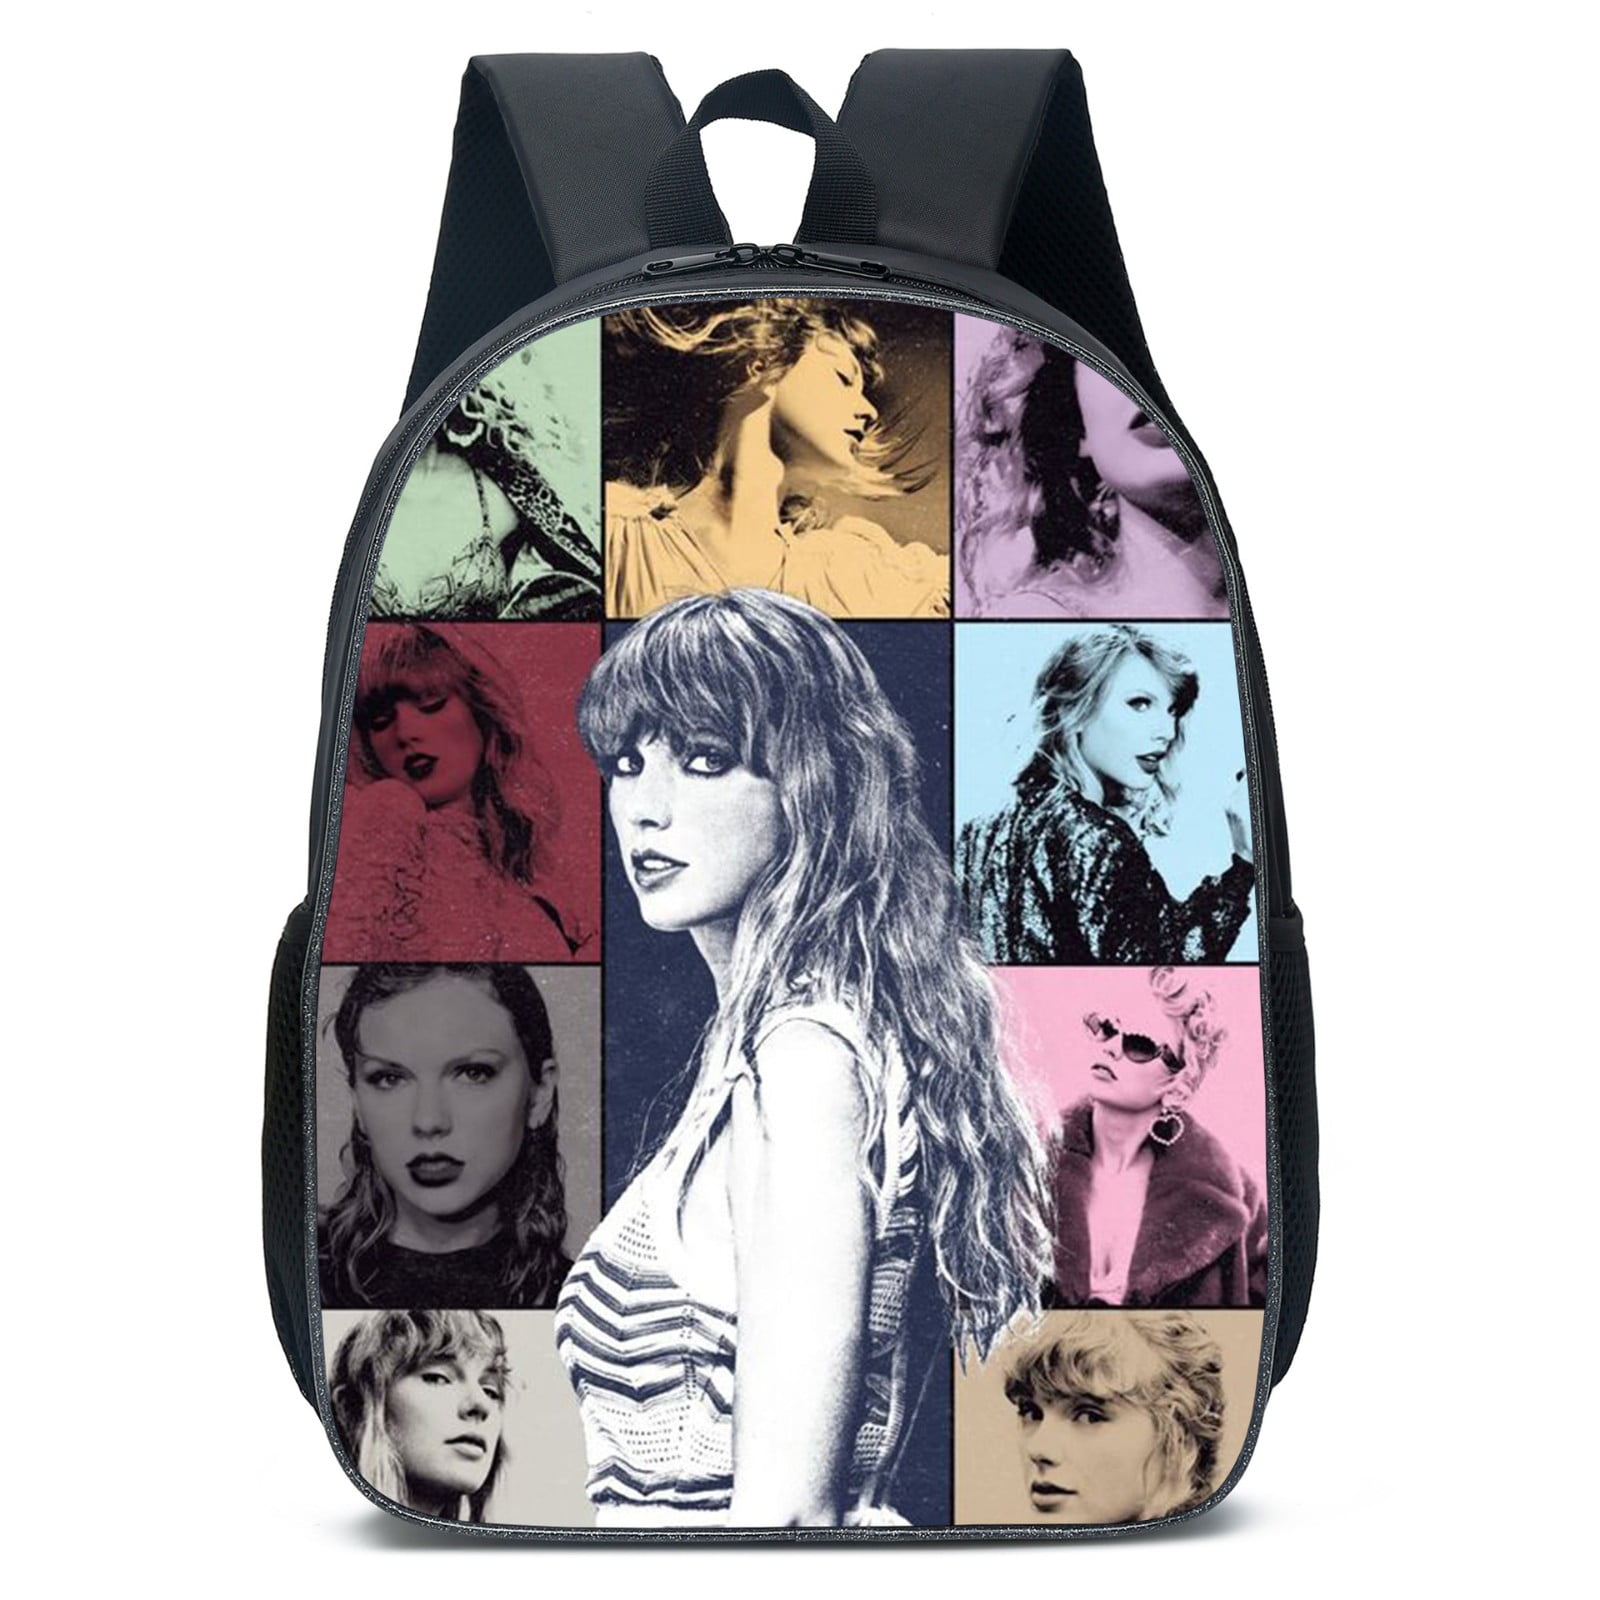 TBKOMH Valentine's Day Gifts,Taylor Swift,1989 Taylors Version,Taylor Swift  Bag,1989 Backpack Student Shoulder Bag Travel Laptop Backpack Gift 